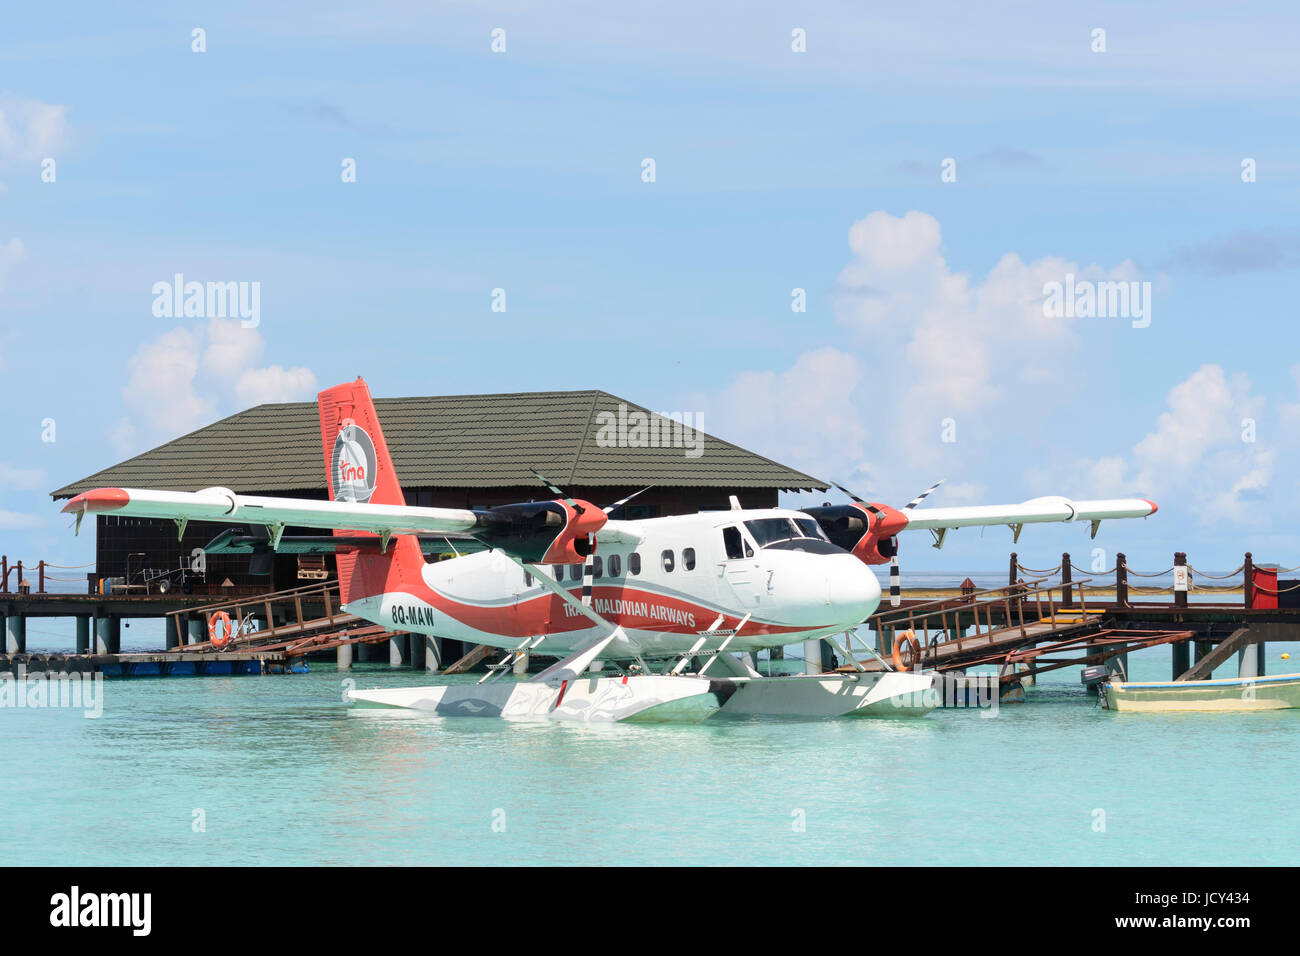 Trans Maldivian Airways DHC-6 Twin Otter seaplane aircraft at Meedhupparu Maldives Stock Photo